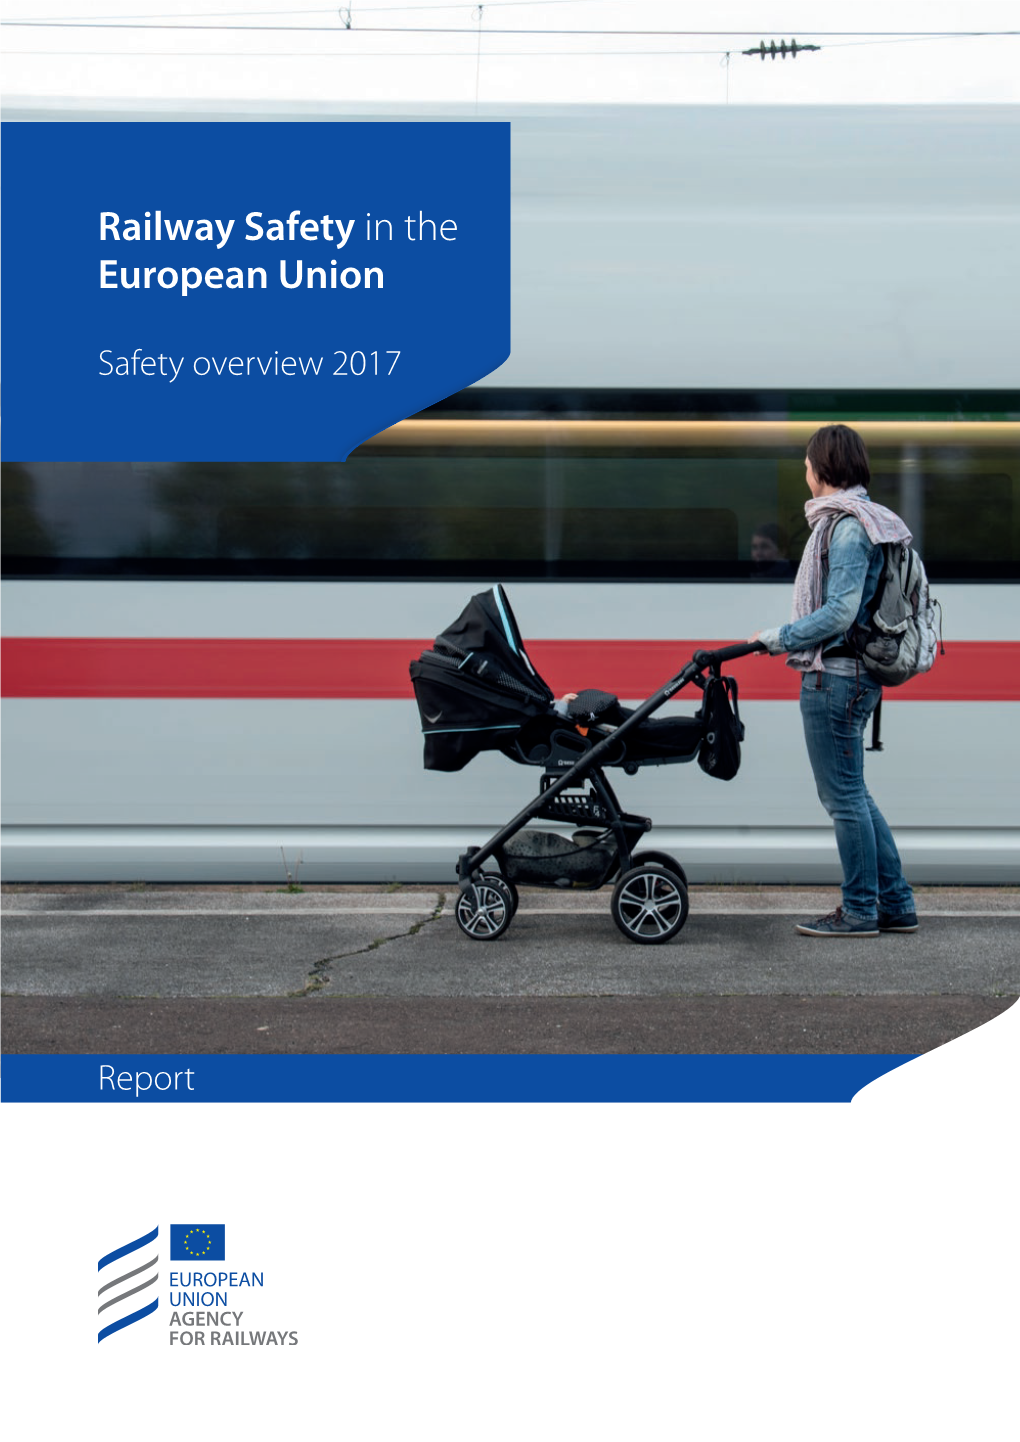 Railway Safety in the European Union